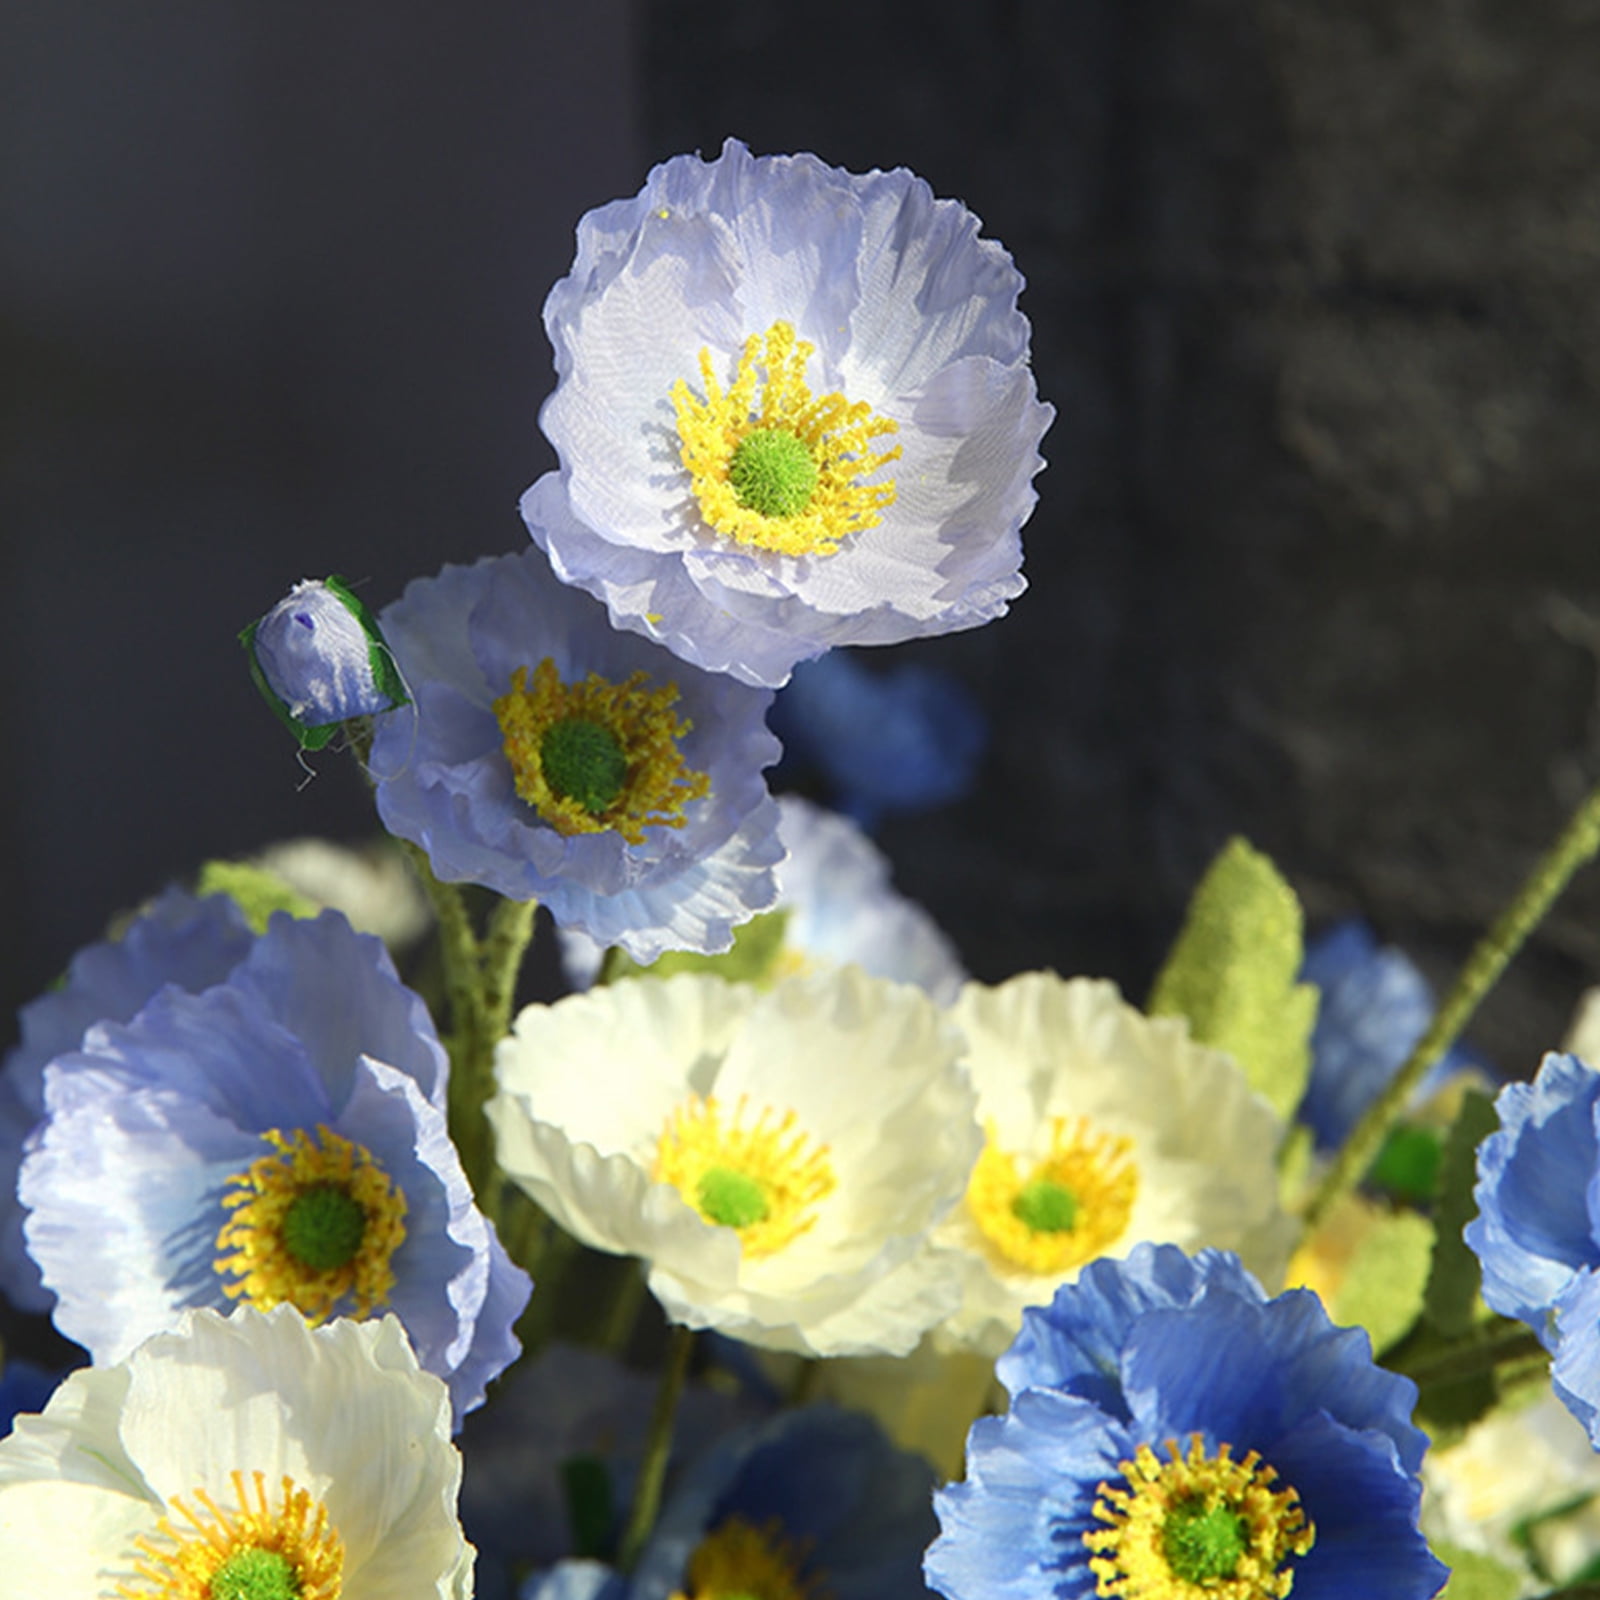 Beautiful Poppy Flowers - 60x80cm (24x32in) / Square